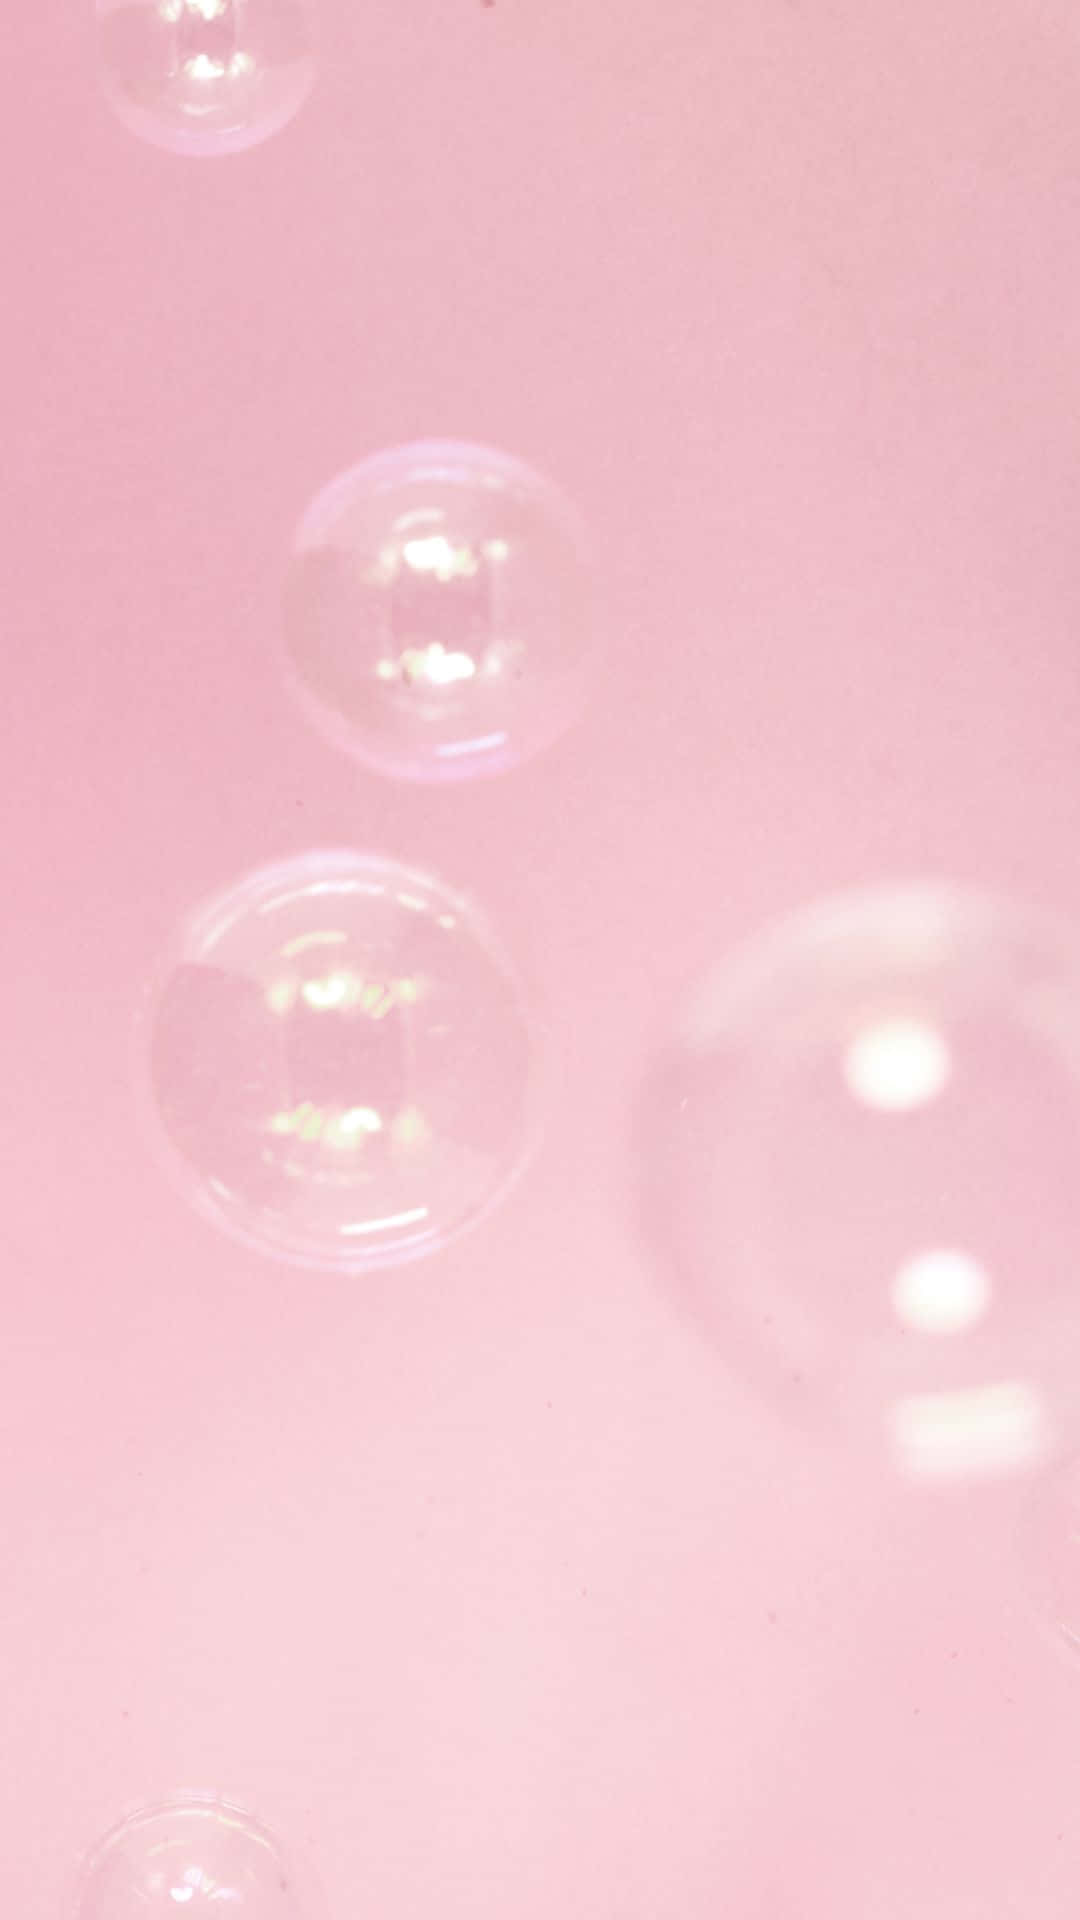 Bubbles Floating In A Pink Liquid Wallpaper